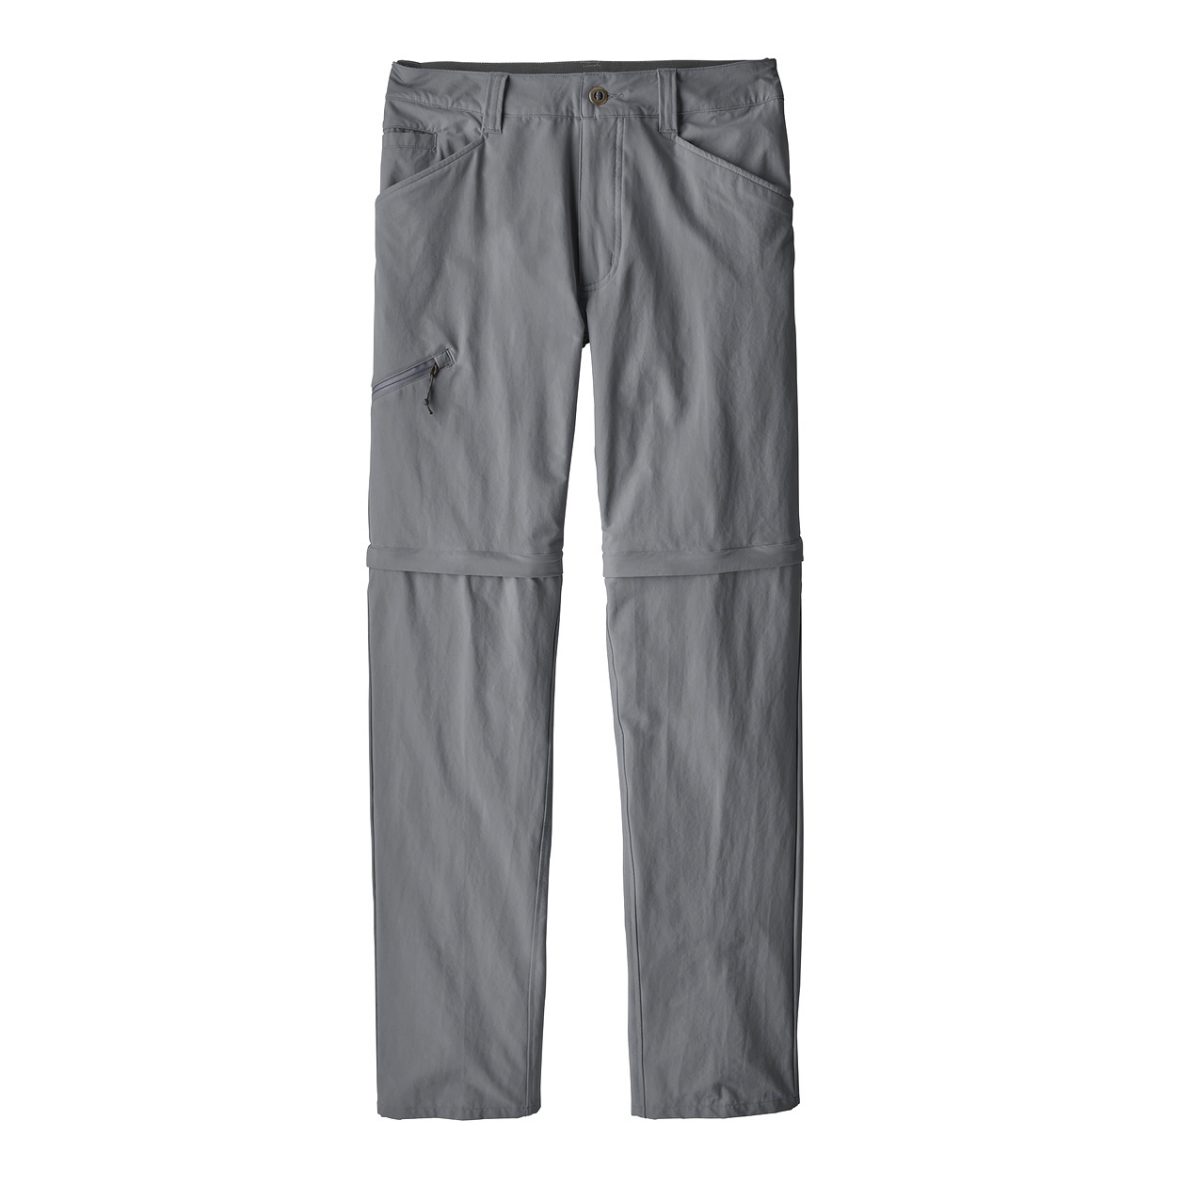 PATAGONIA MEN'S QUANDARY CONVERTIBLE PANTS pantaloni da montagna e escursionismo uomo